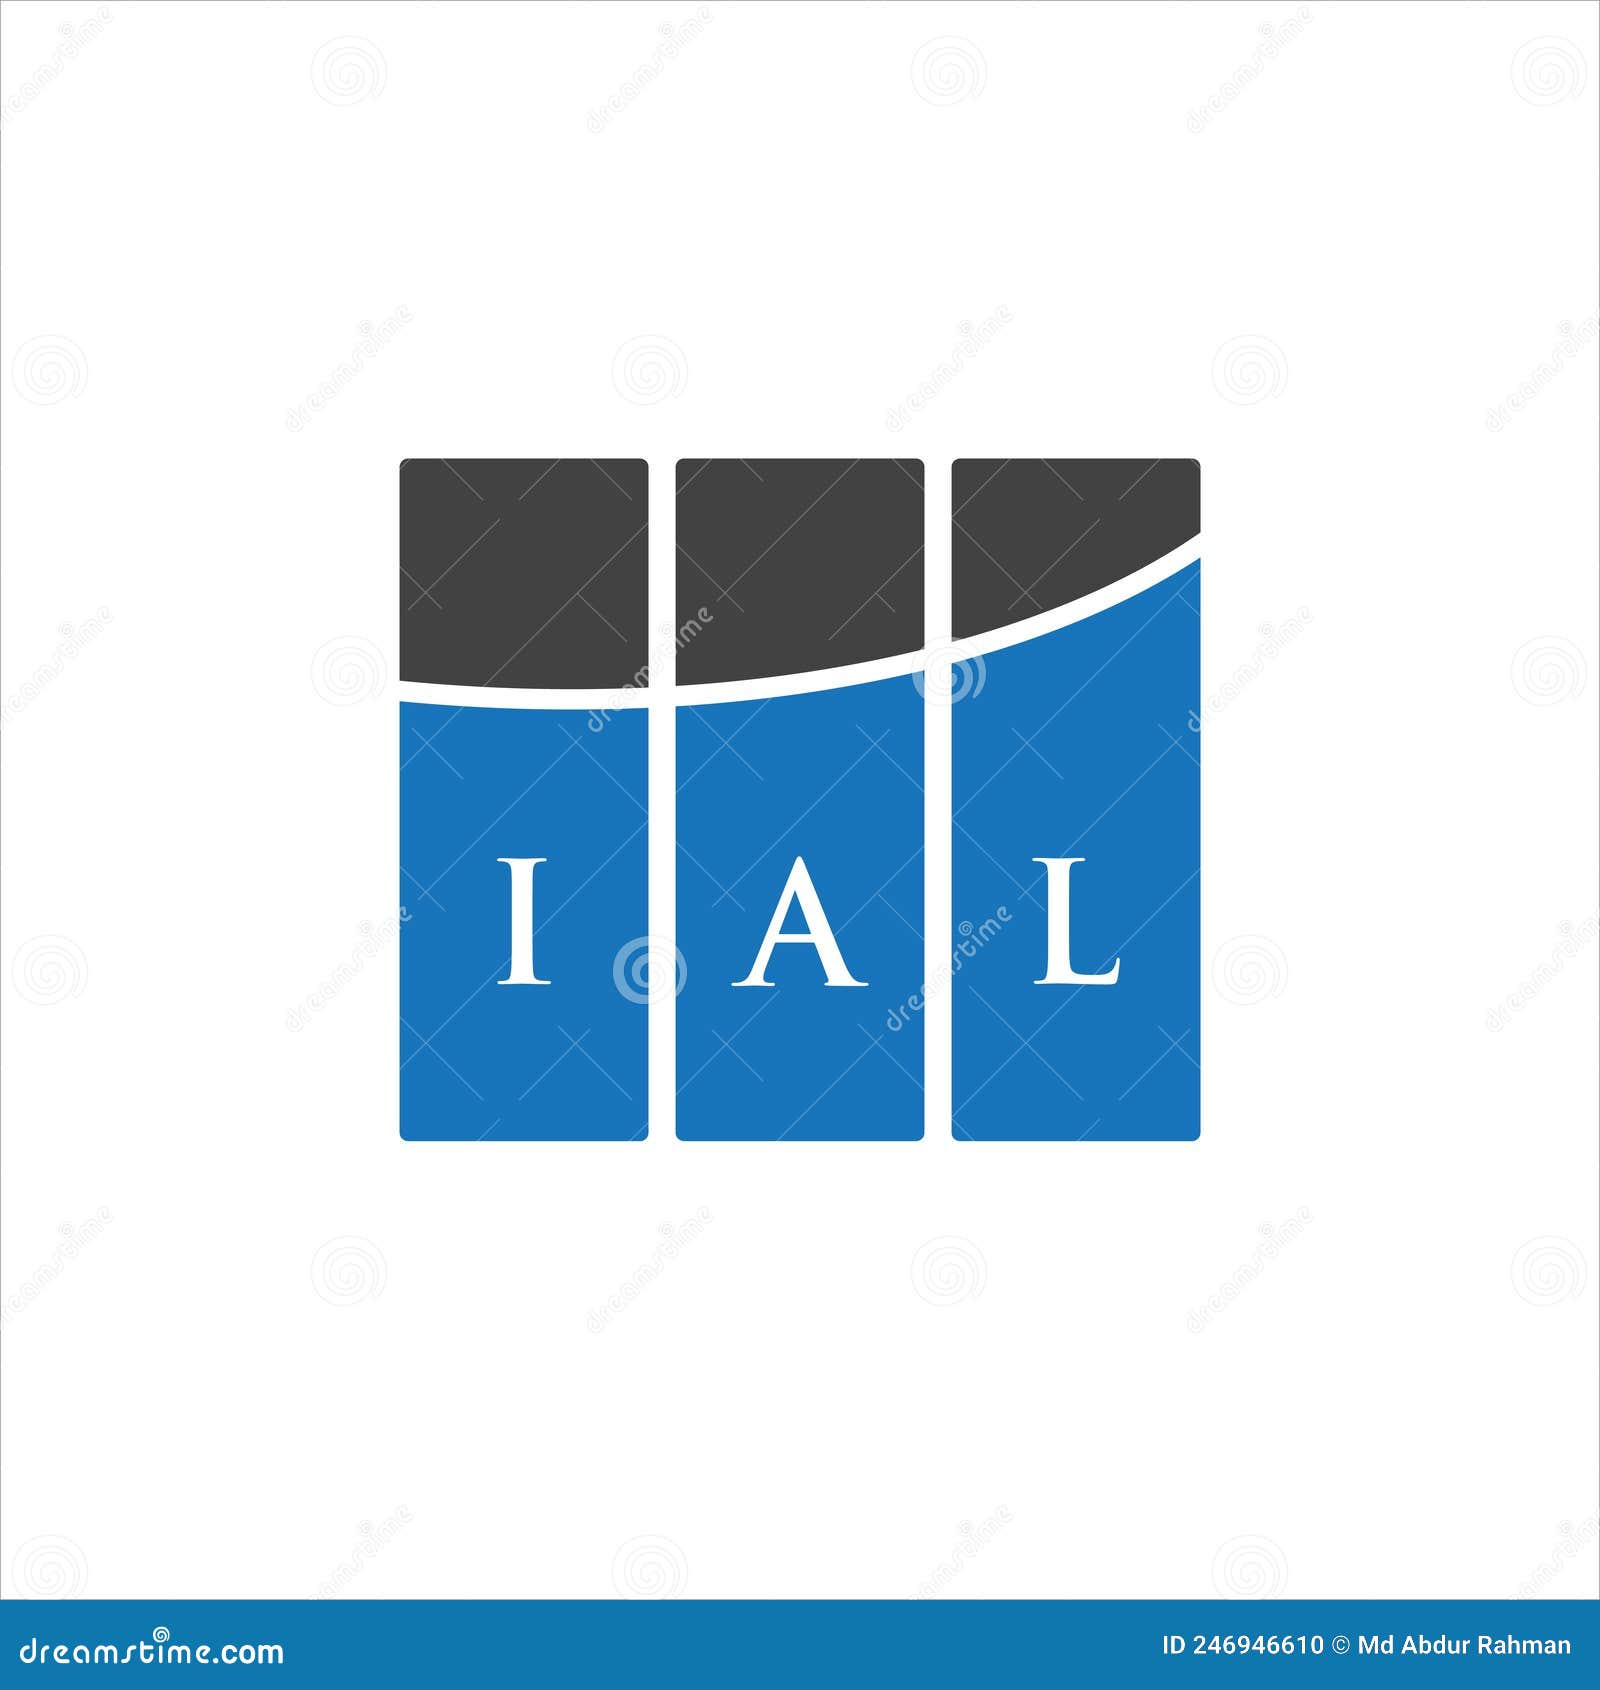 ial letter logo  on white background. ial creative initials letter logo concept. ial letter .ial letter logo  on